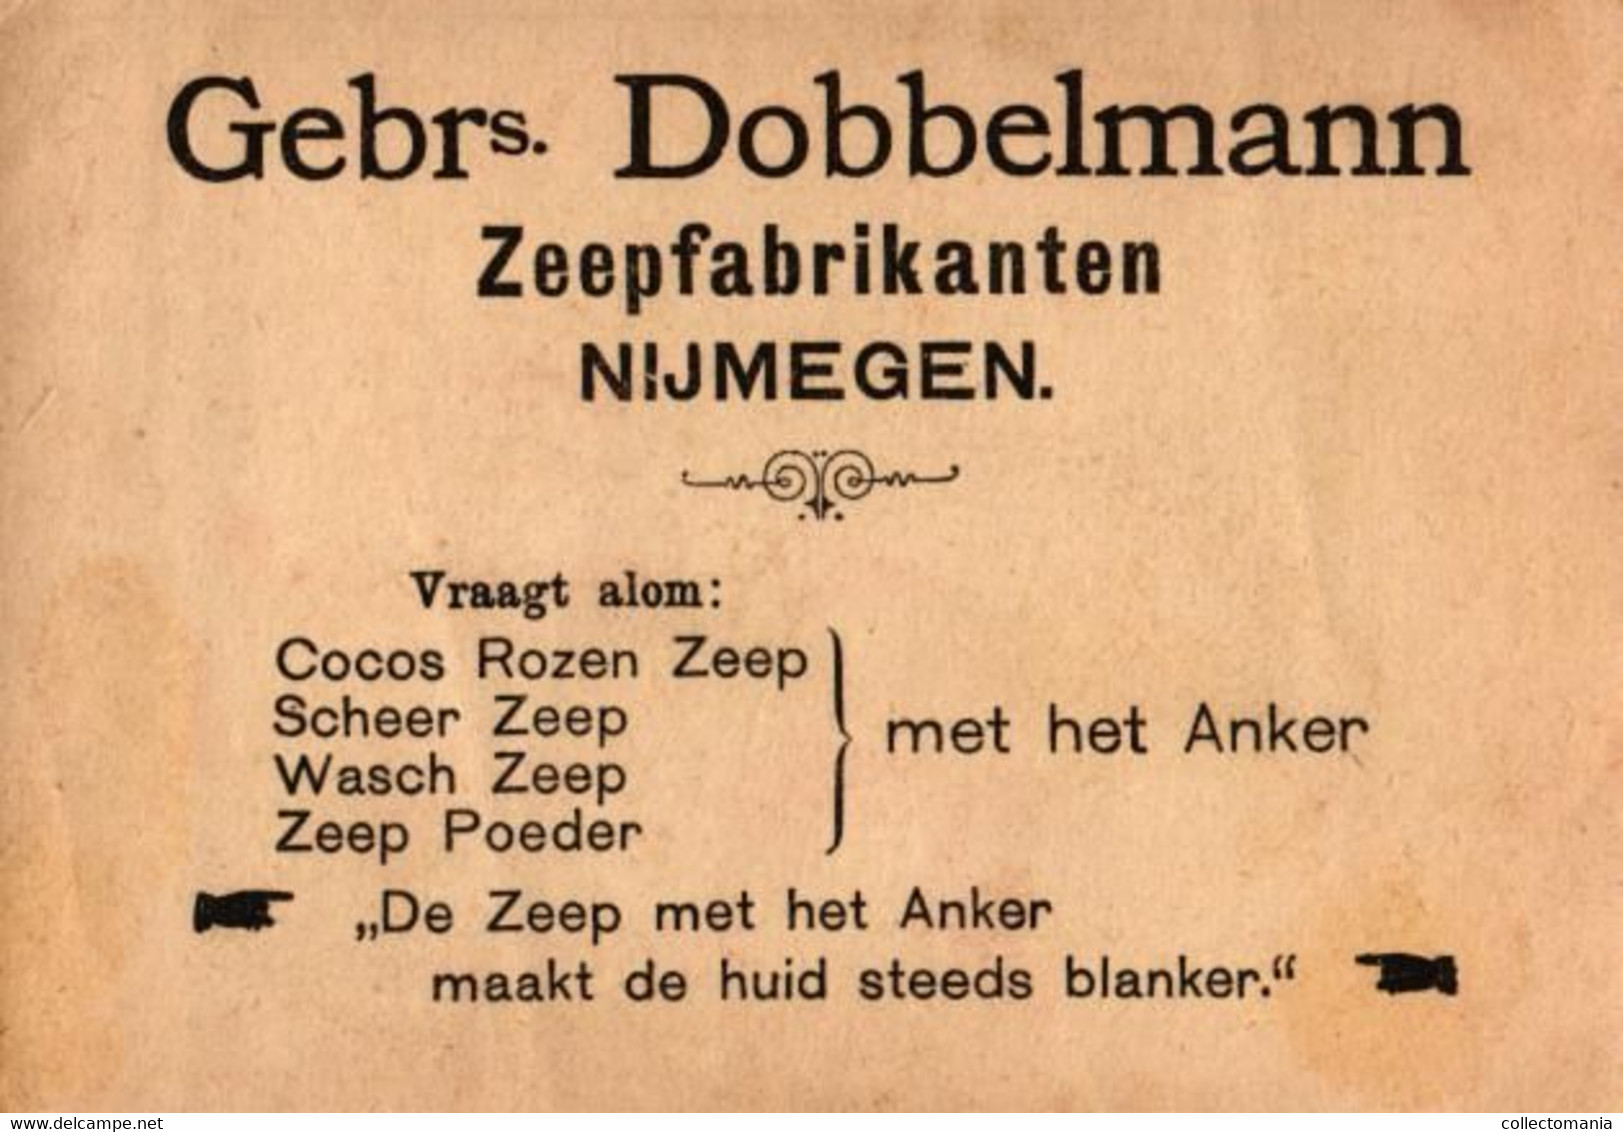 9 Card Gebroeders Dobbelmann Zeepfabrikanten Nijmegem Nederland, zeer mooie staat, reklame kaartjes, litho anno 1890